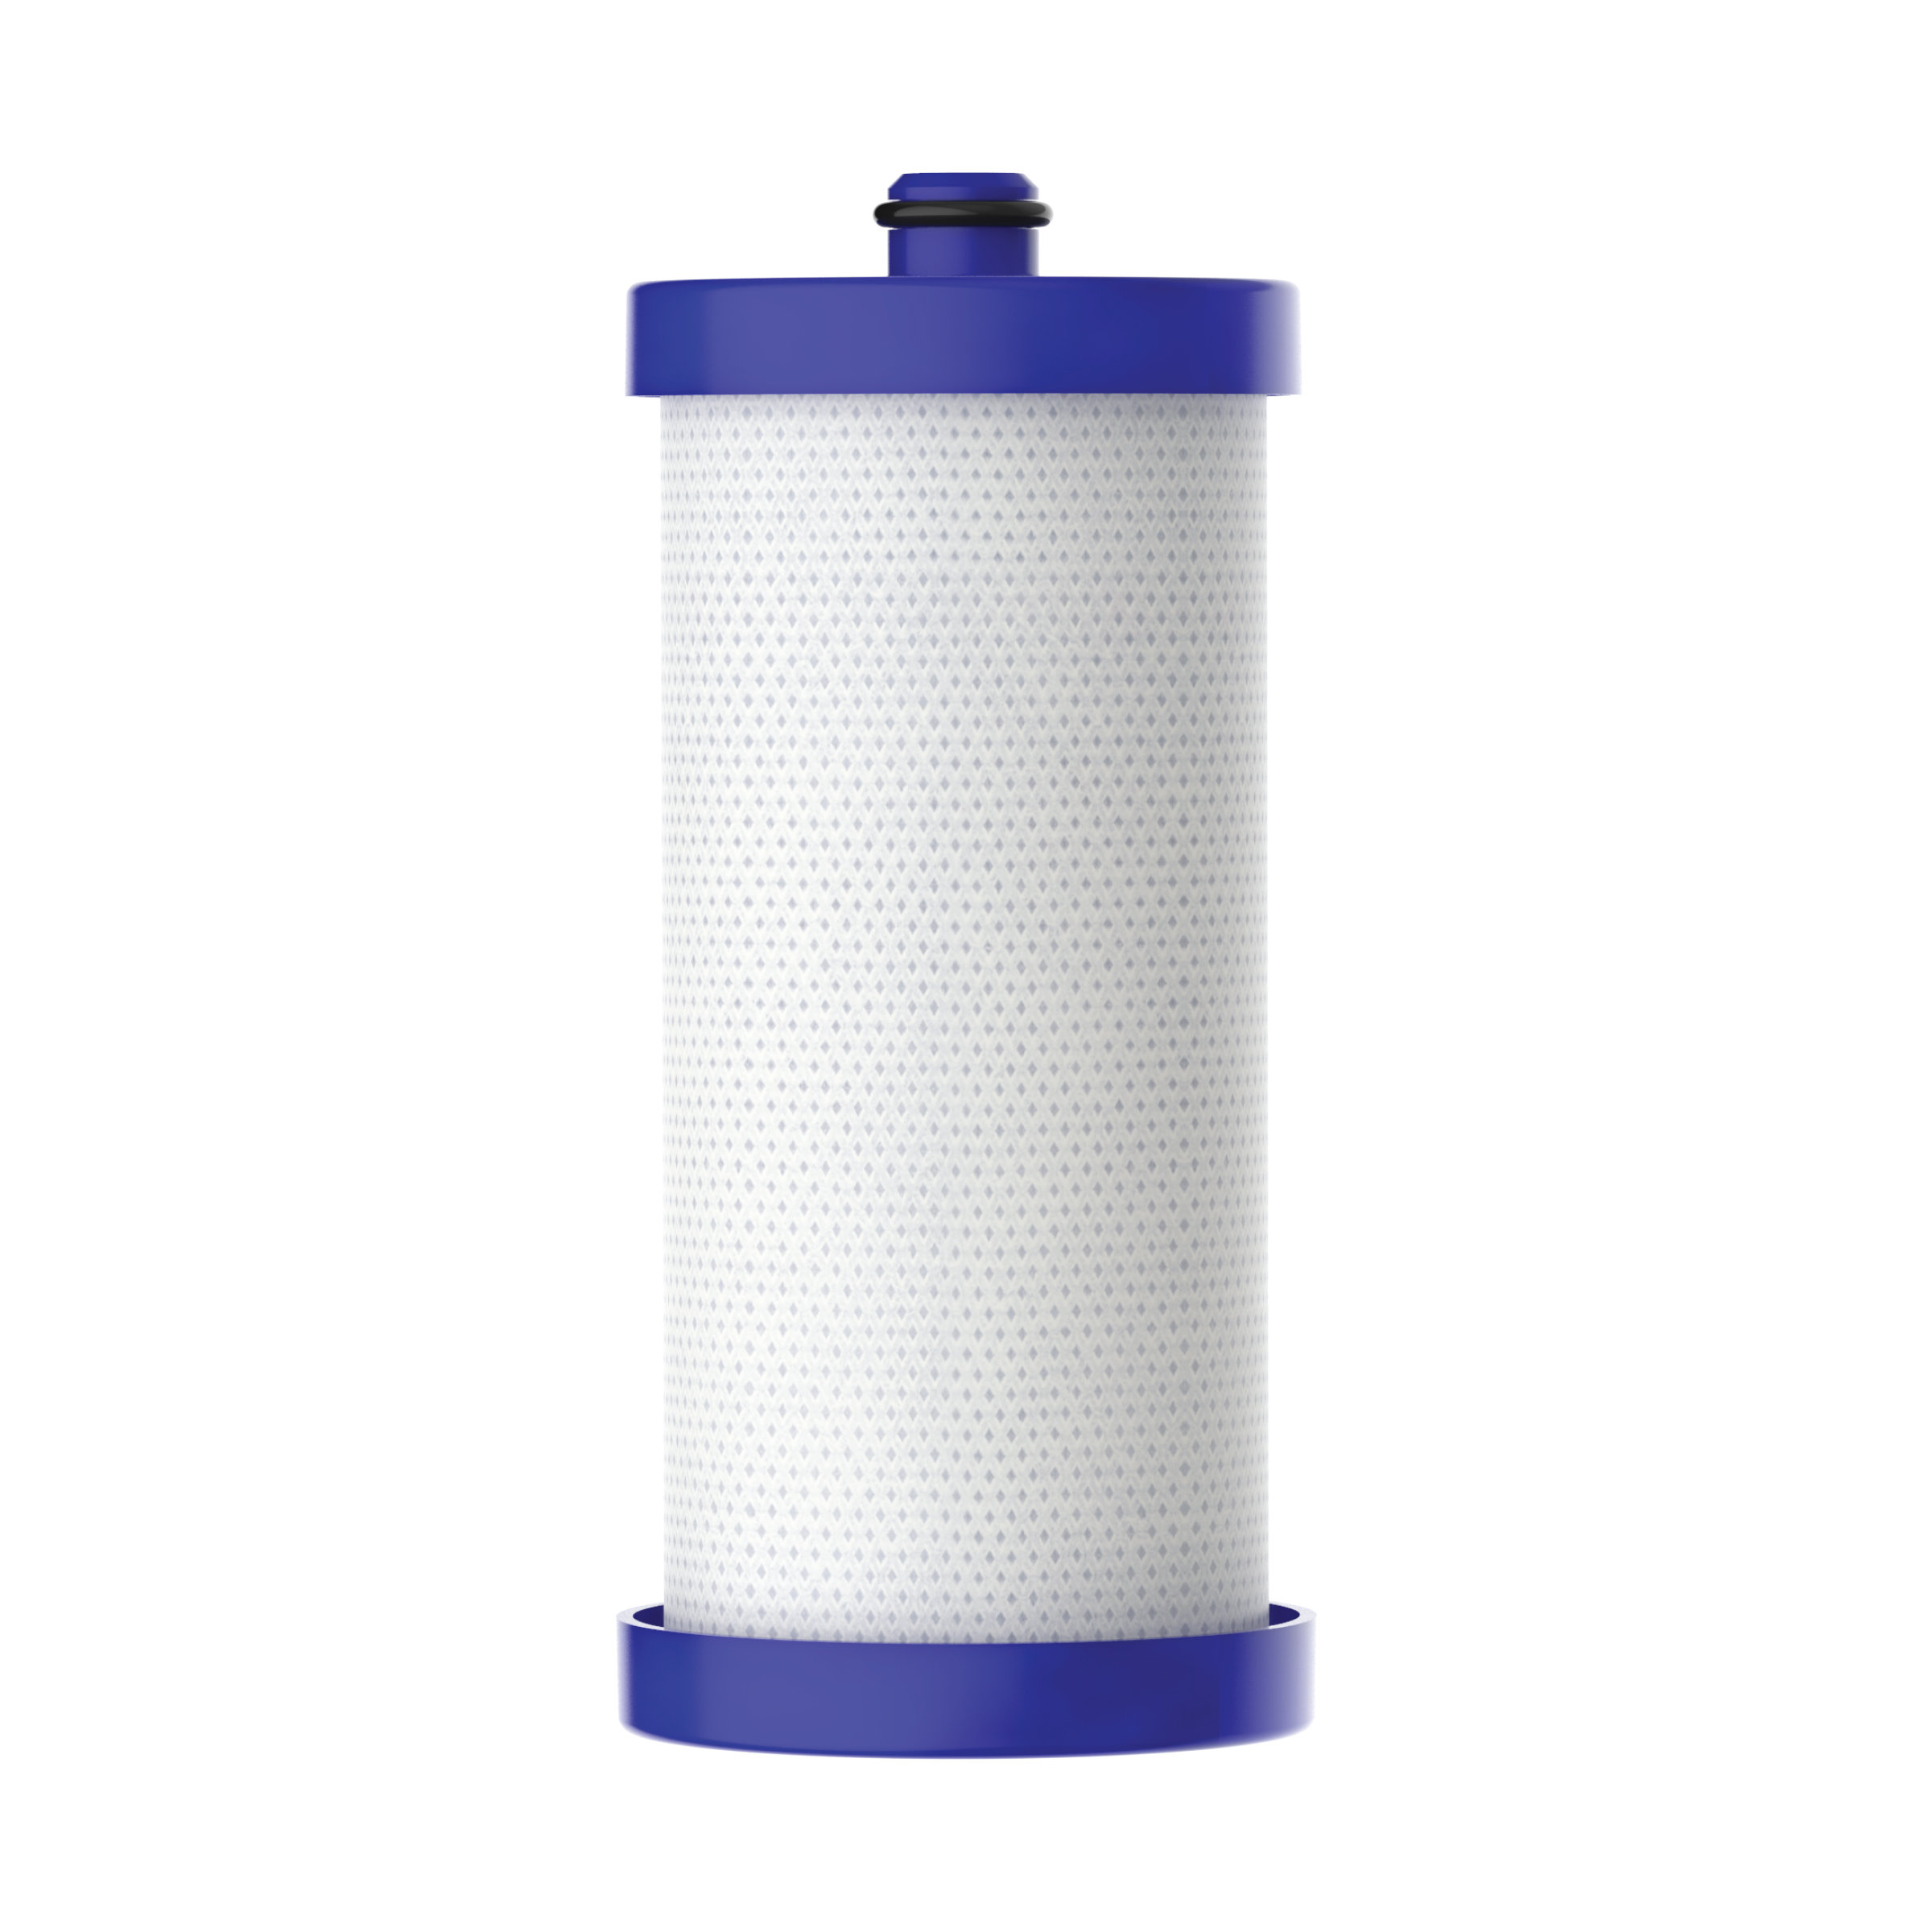 Frigidaire PureSource WFCB Water Filter 